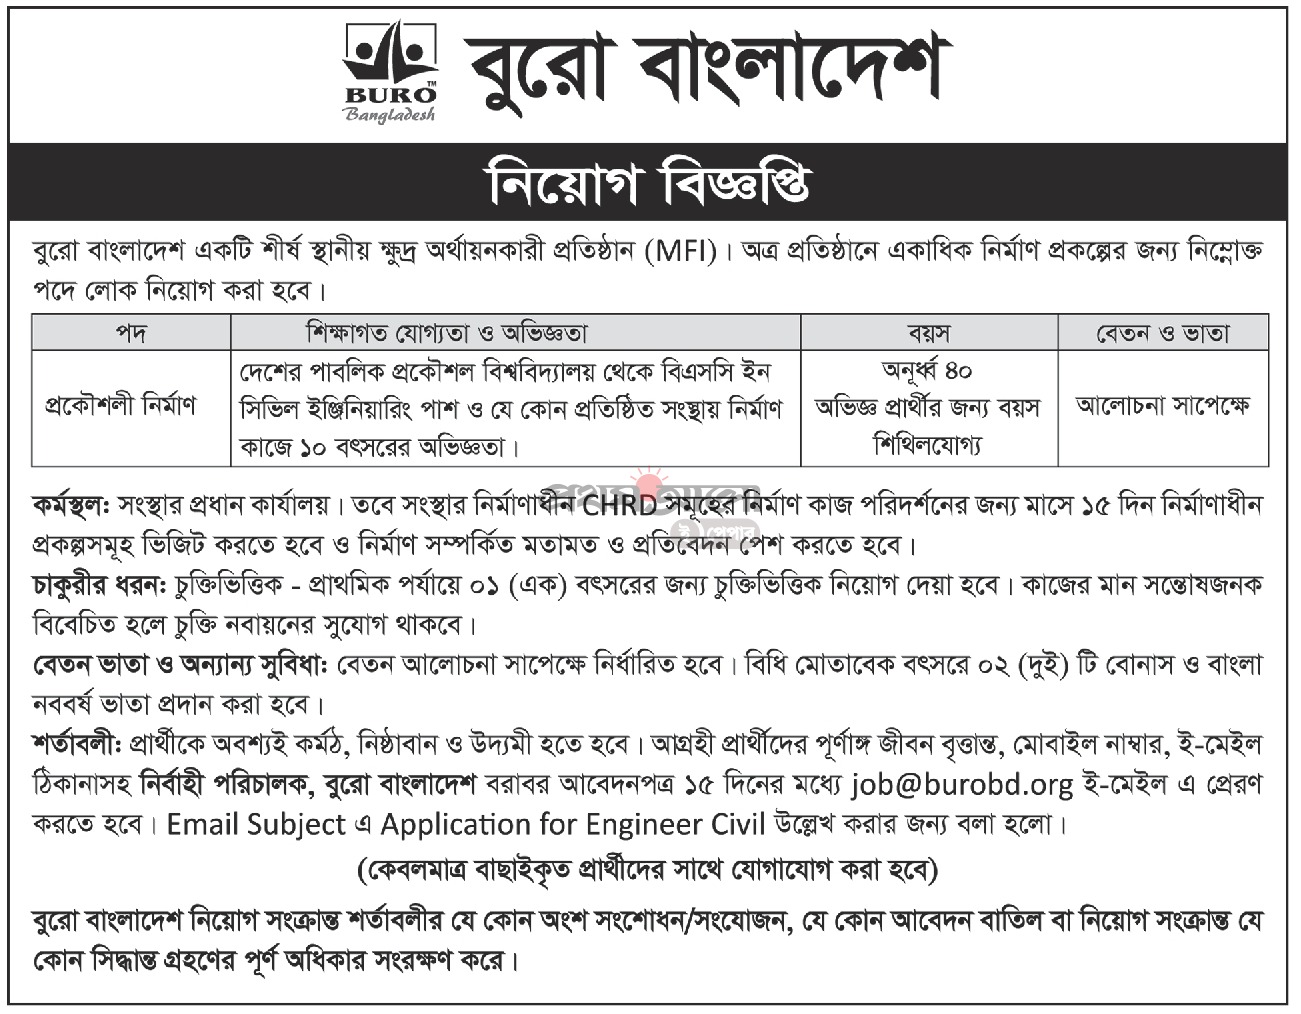 BURO Bangladesh job, fast job bd